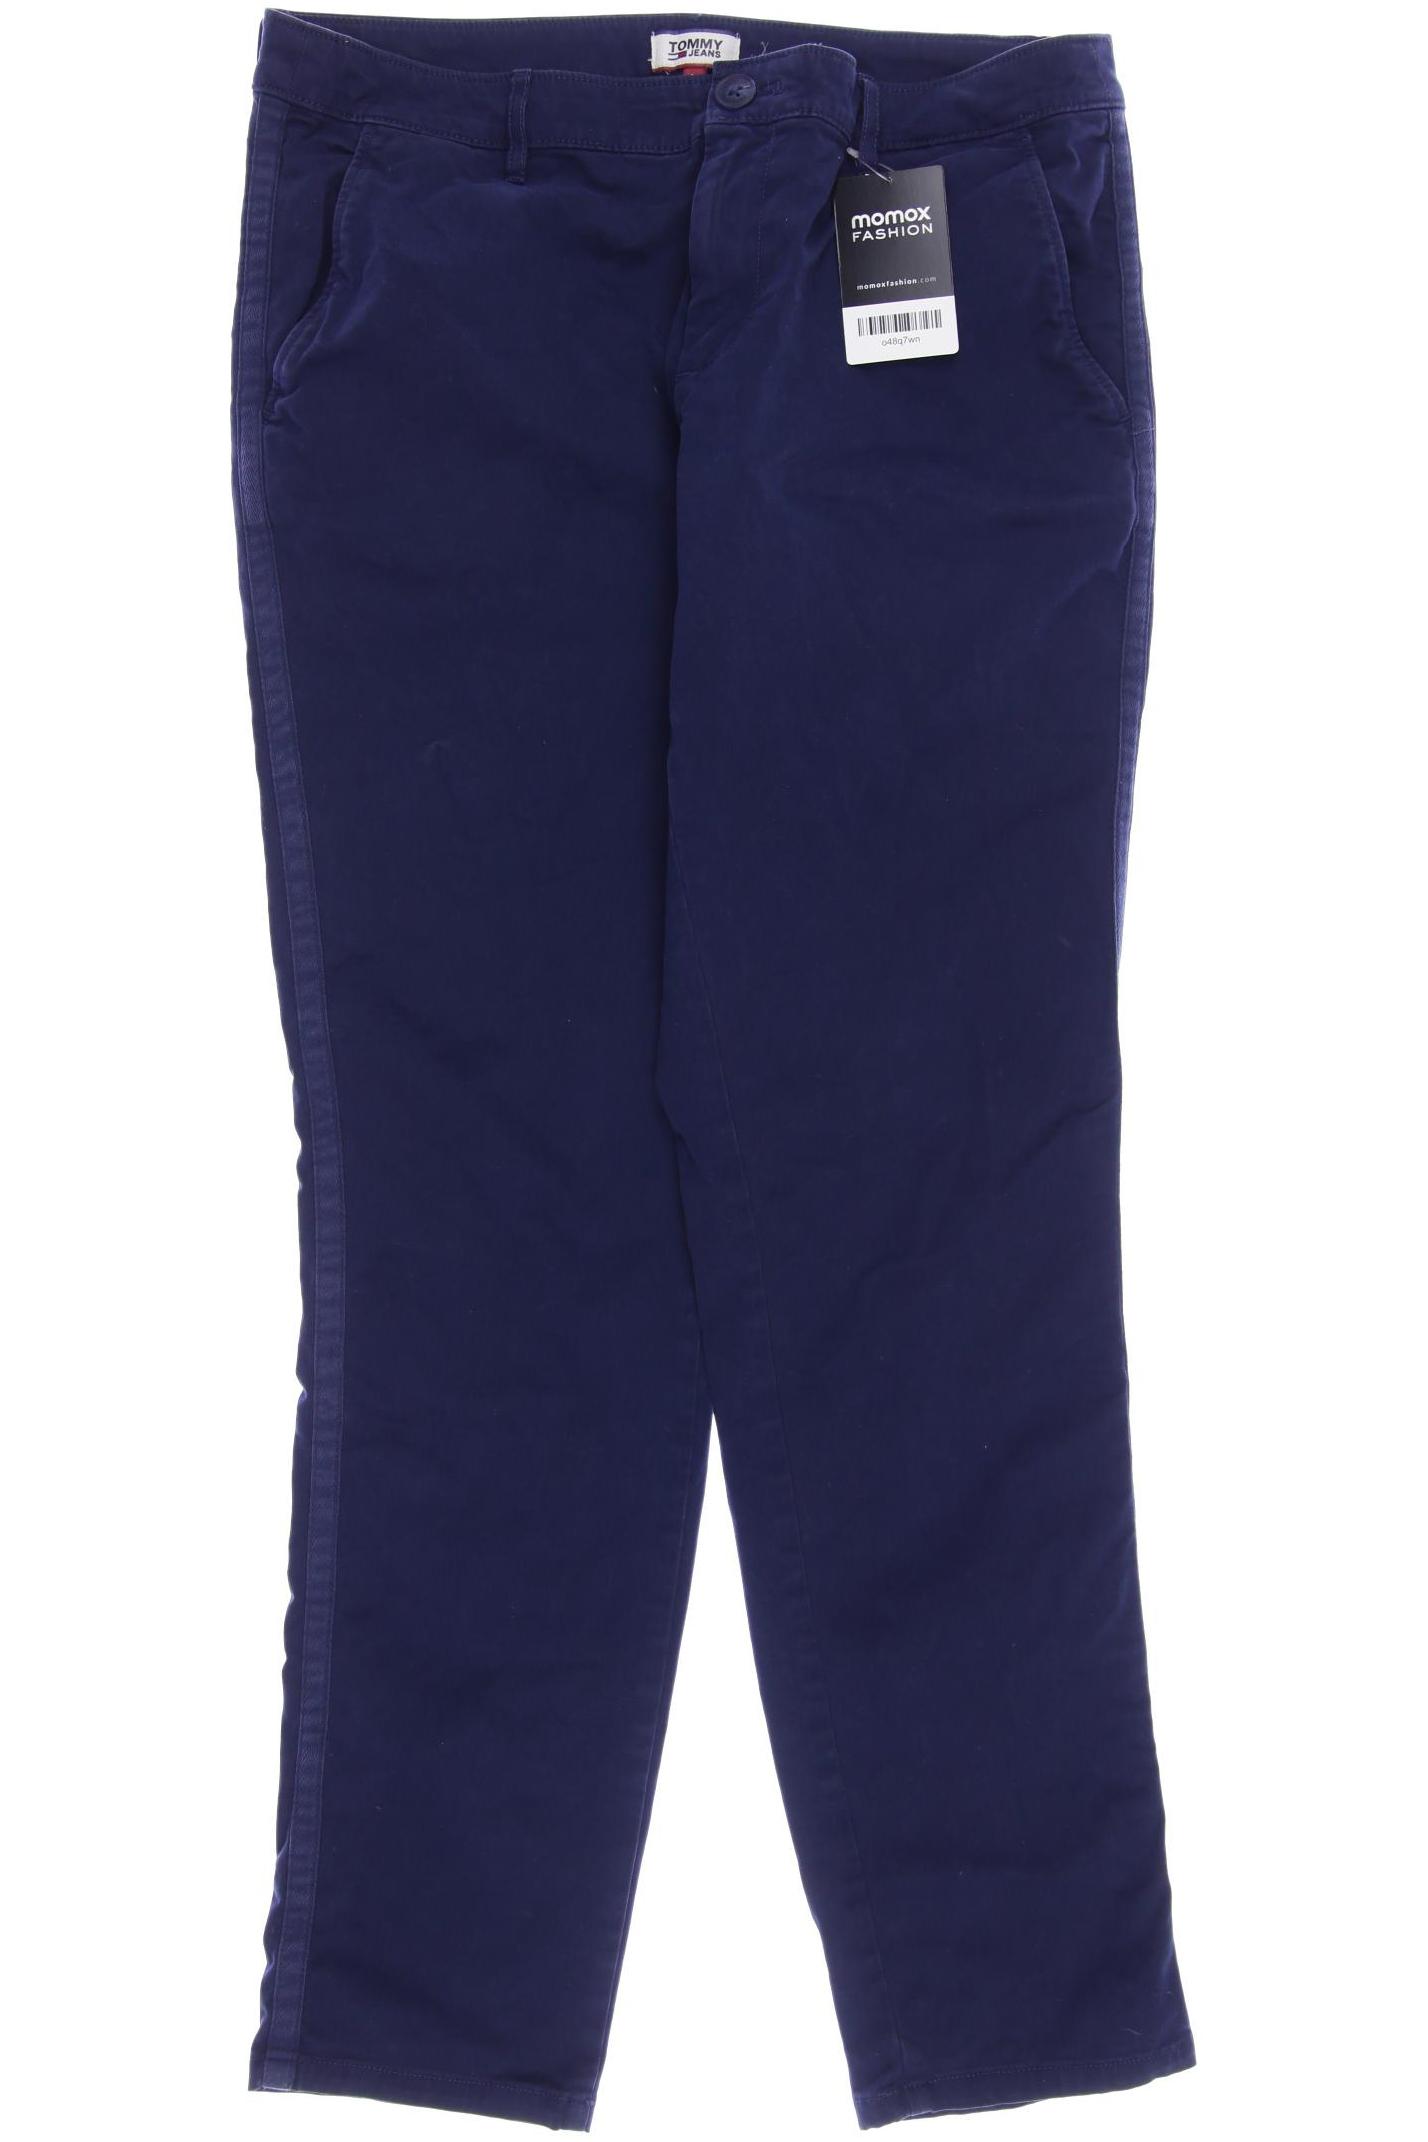 Tommy Jeans Damen Stoffhose, marineblau, Gr. 40 von Tommy Jeans